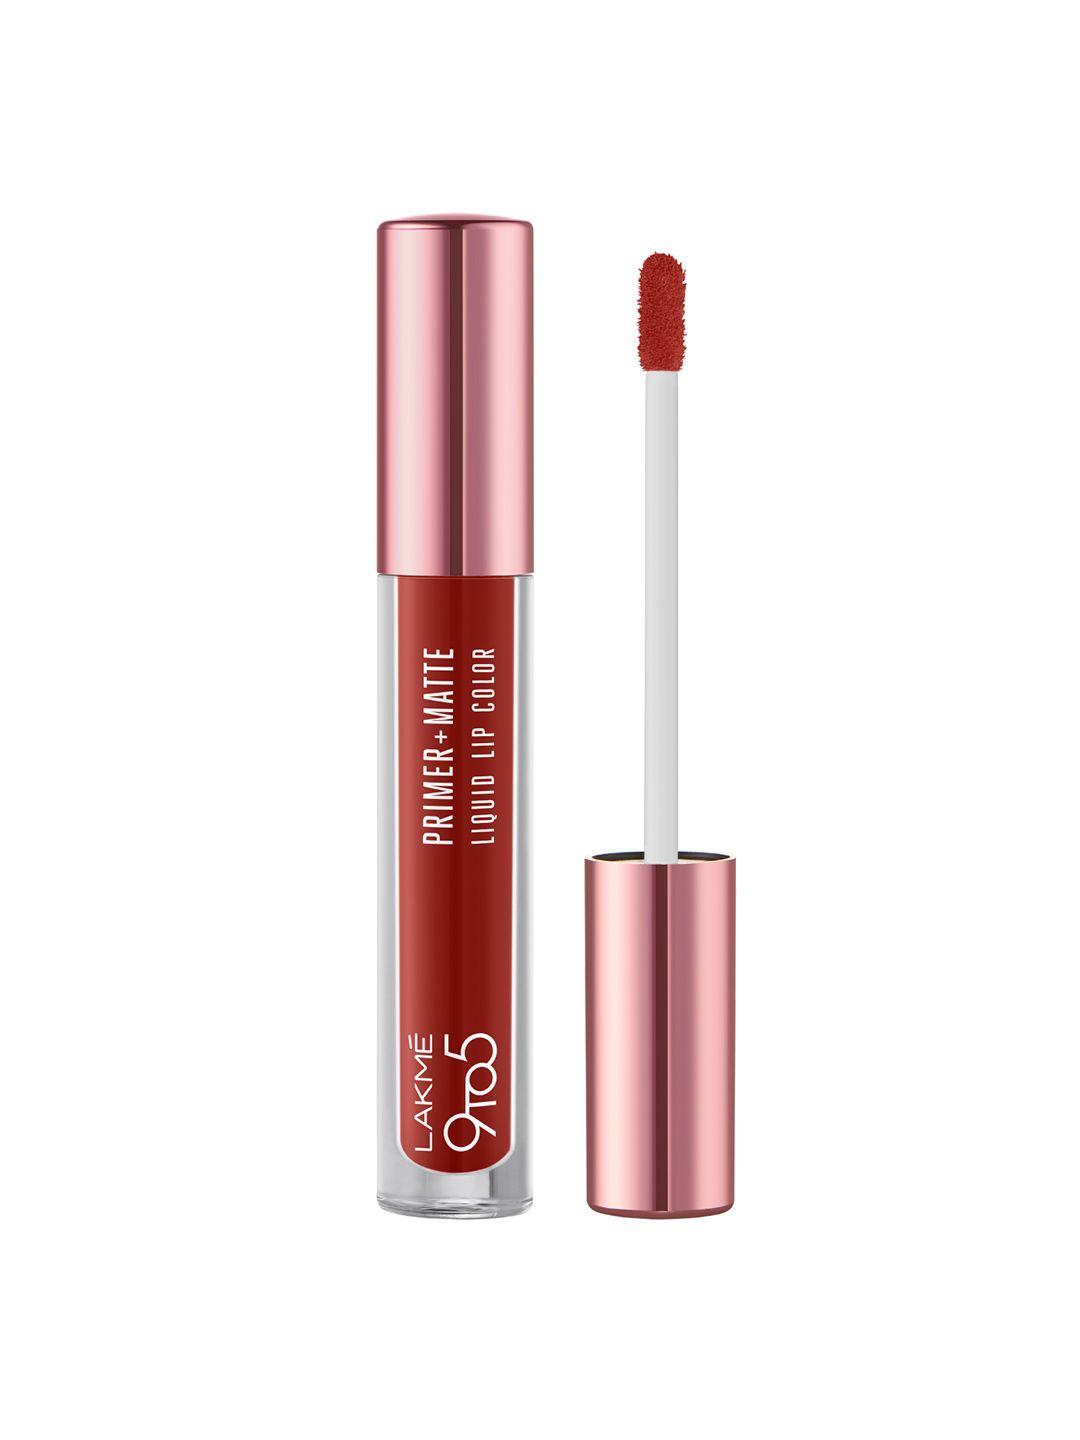 lakme 9to5 primer + matte liquid lip color 4.2 ml - rustic red mr5